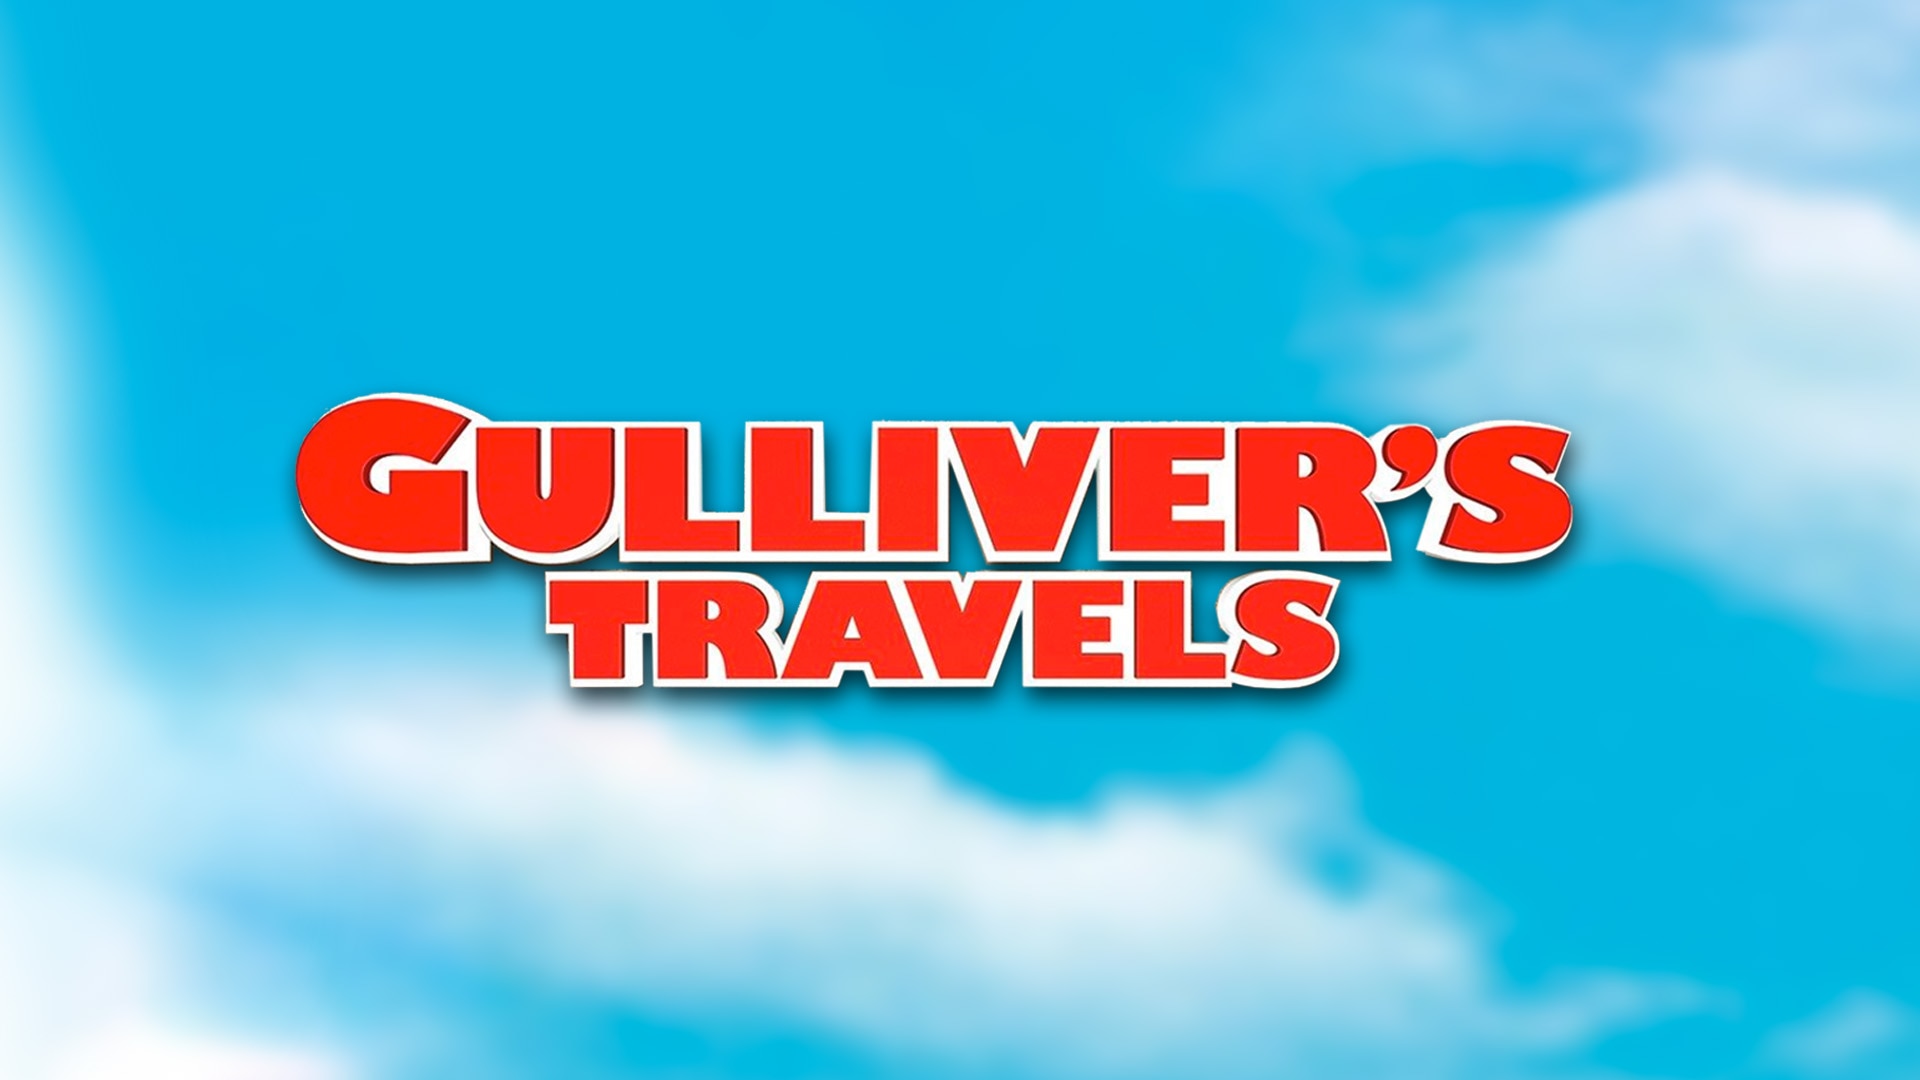 gulliver's travel resort